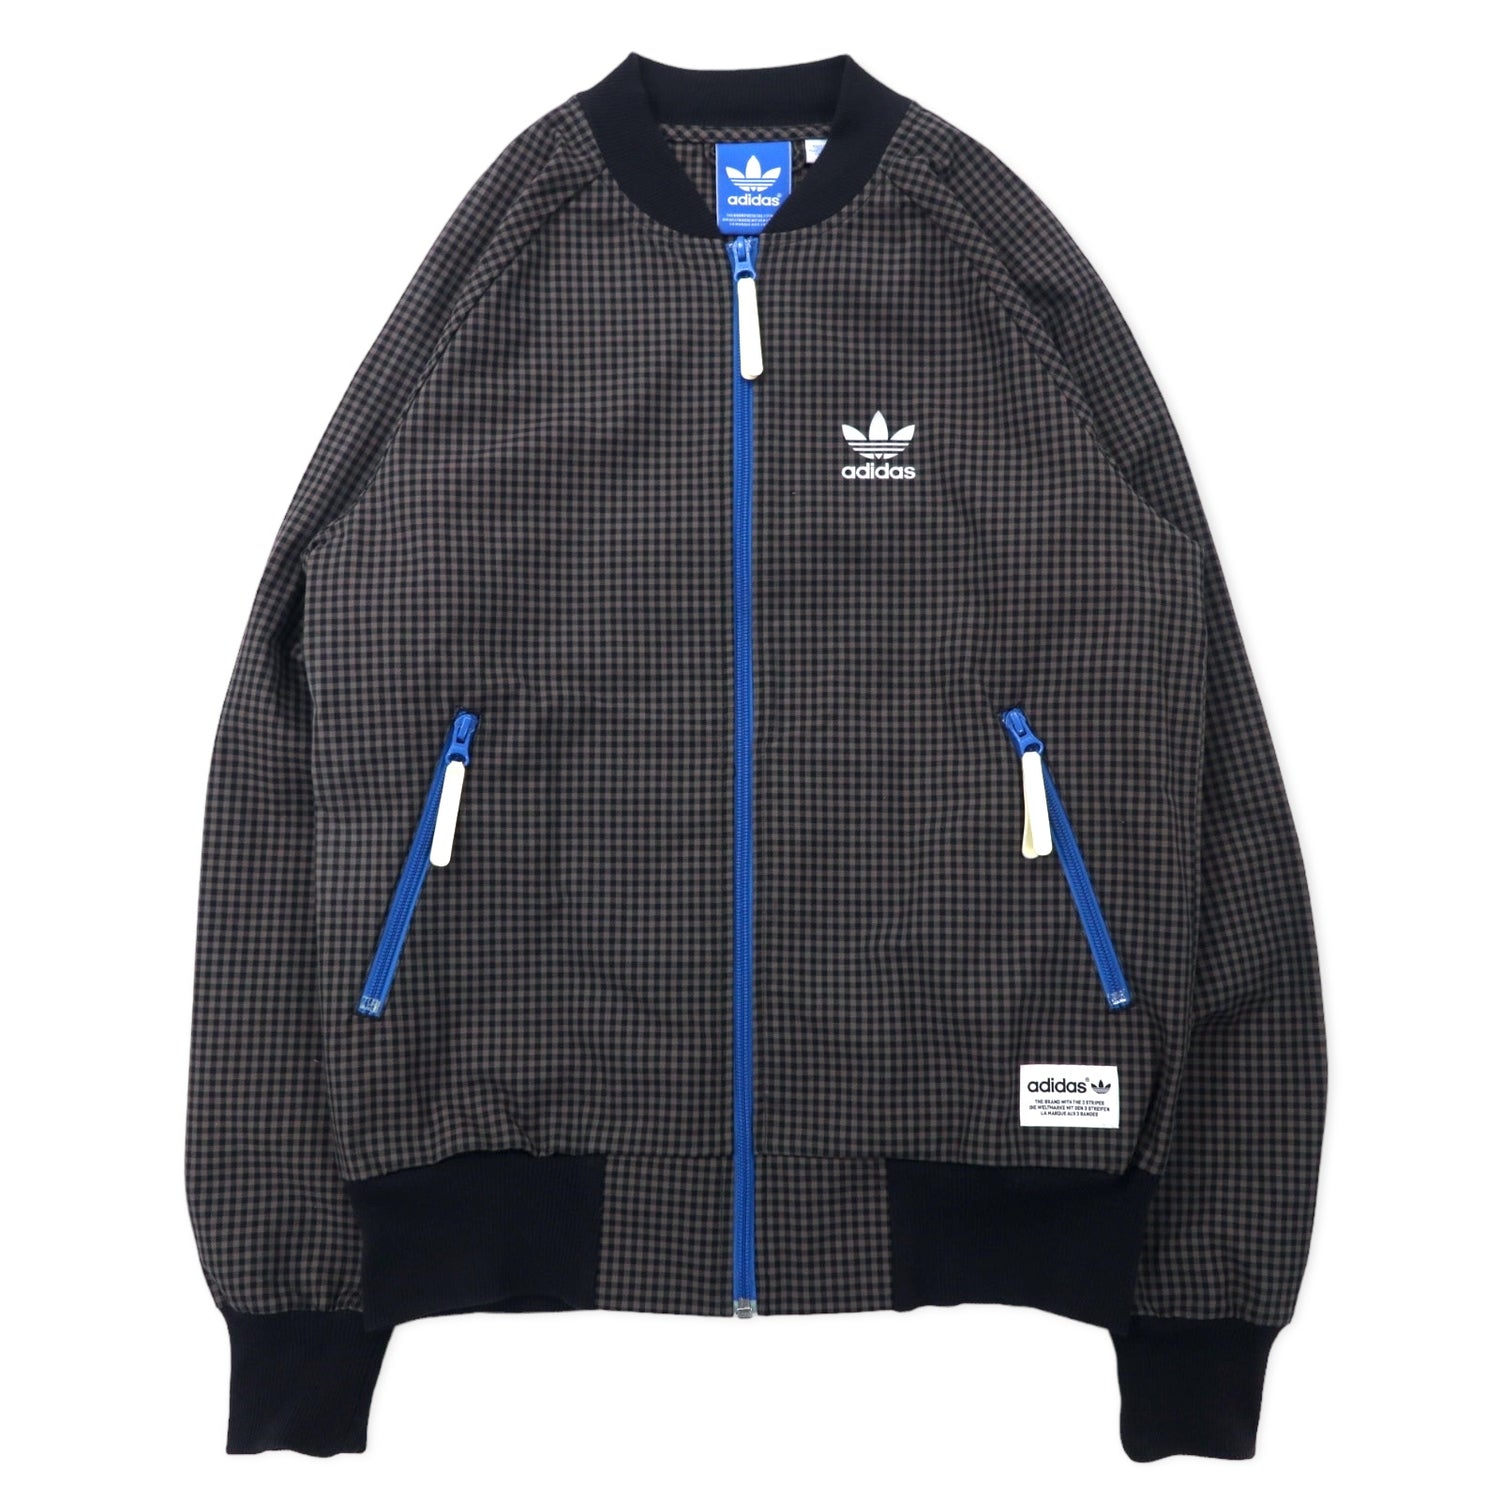 Adidas Originals Track Jacket Jersey S Gray CHECKED Cotton Trefoil 